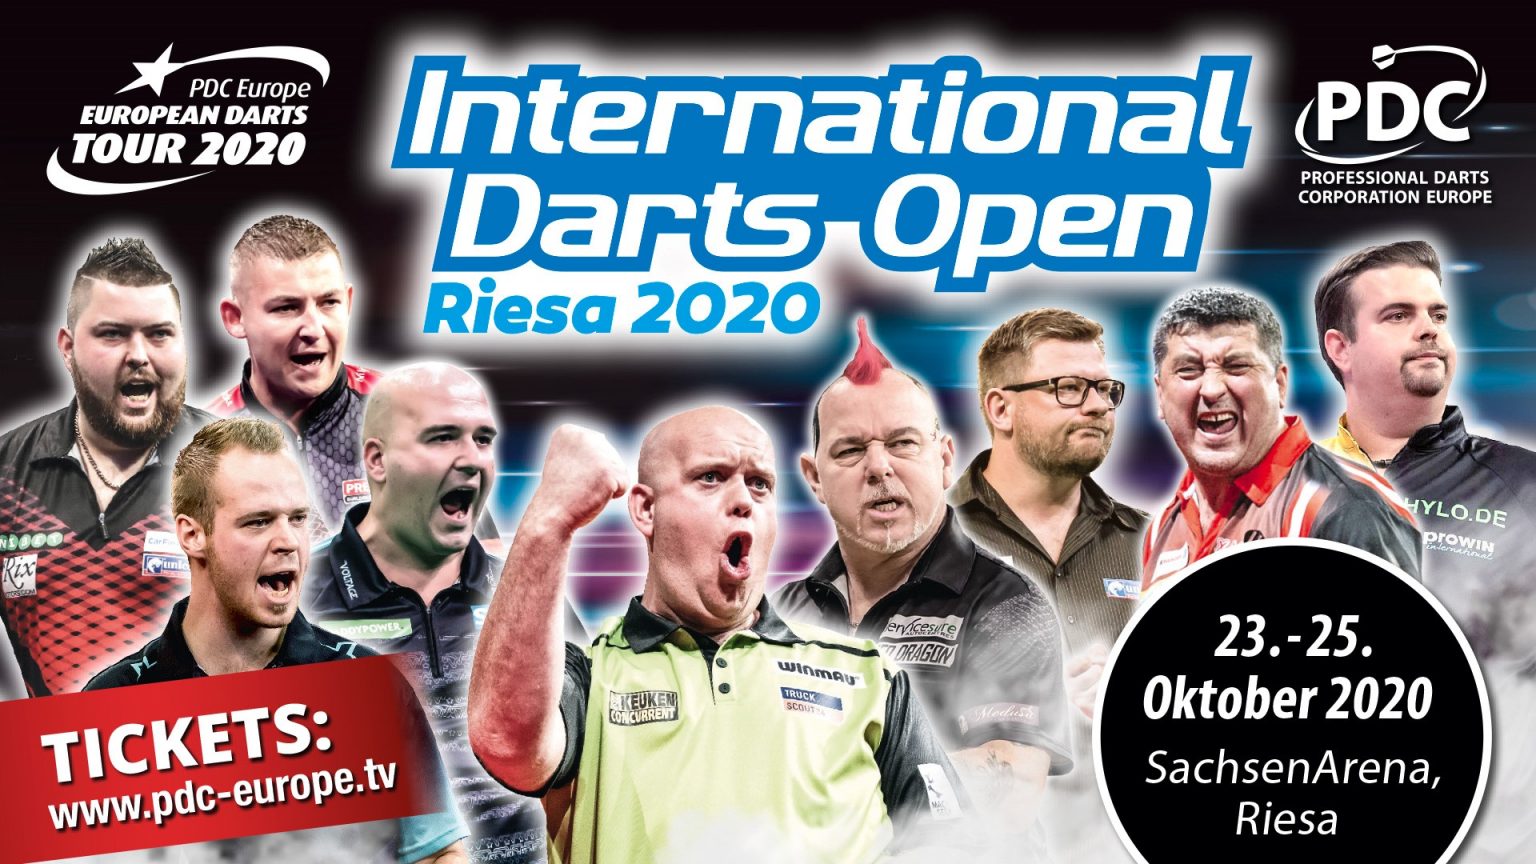 International Darts Open in Riesa Elbgeflüster